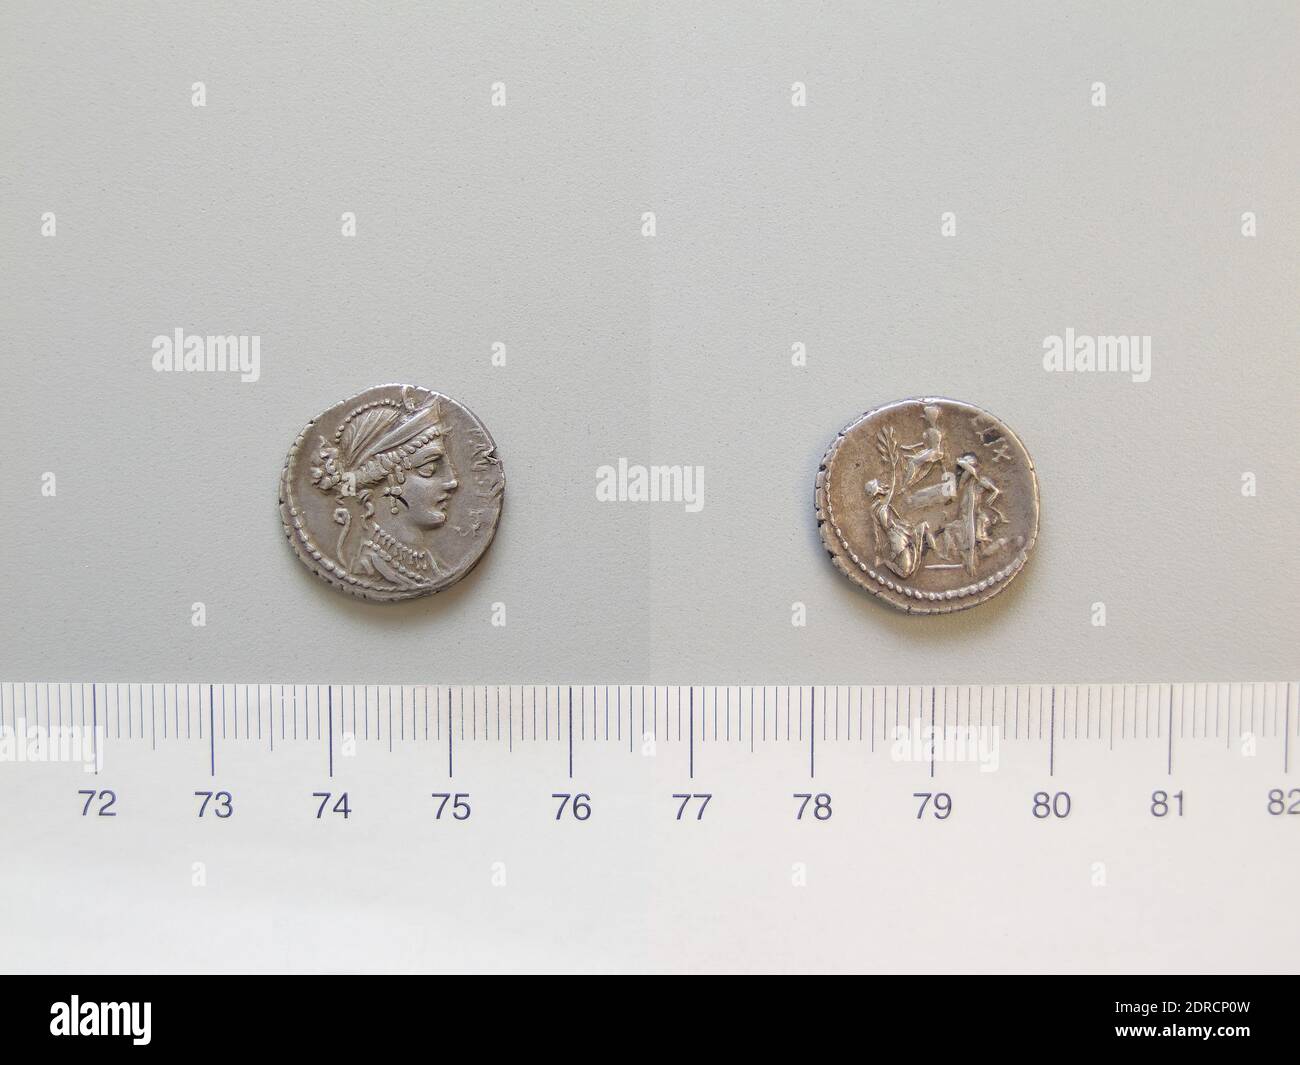 Mint: Rome, Magistrate: Faustus Cornelius Sulla, Denarius from Rome, 56 B.C., Silver, 3.85 g, 6:00, 19.2 mm, Made in Rome, Italy, Roman, 1st century B.C., Numismatics Stock Photo